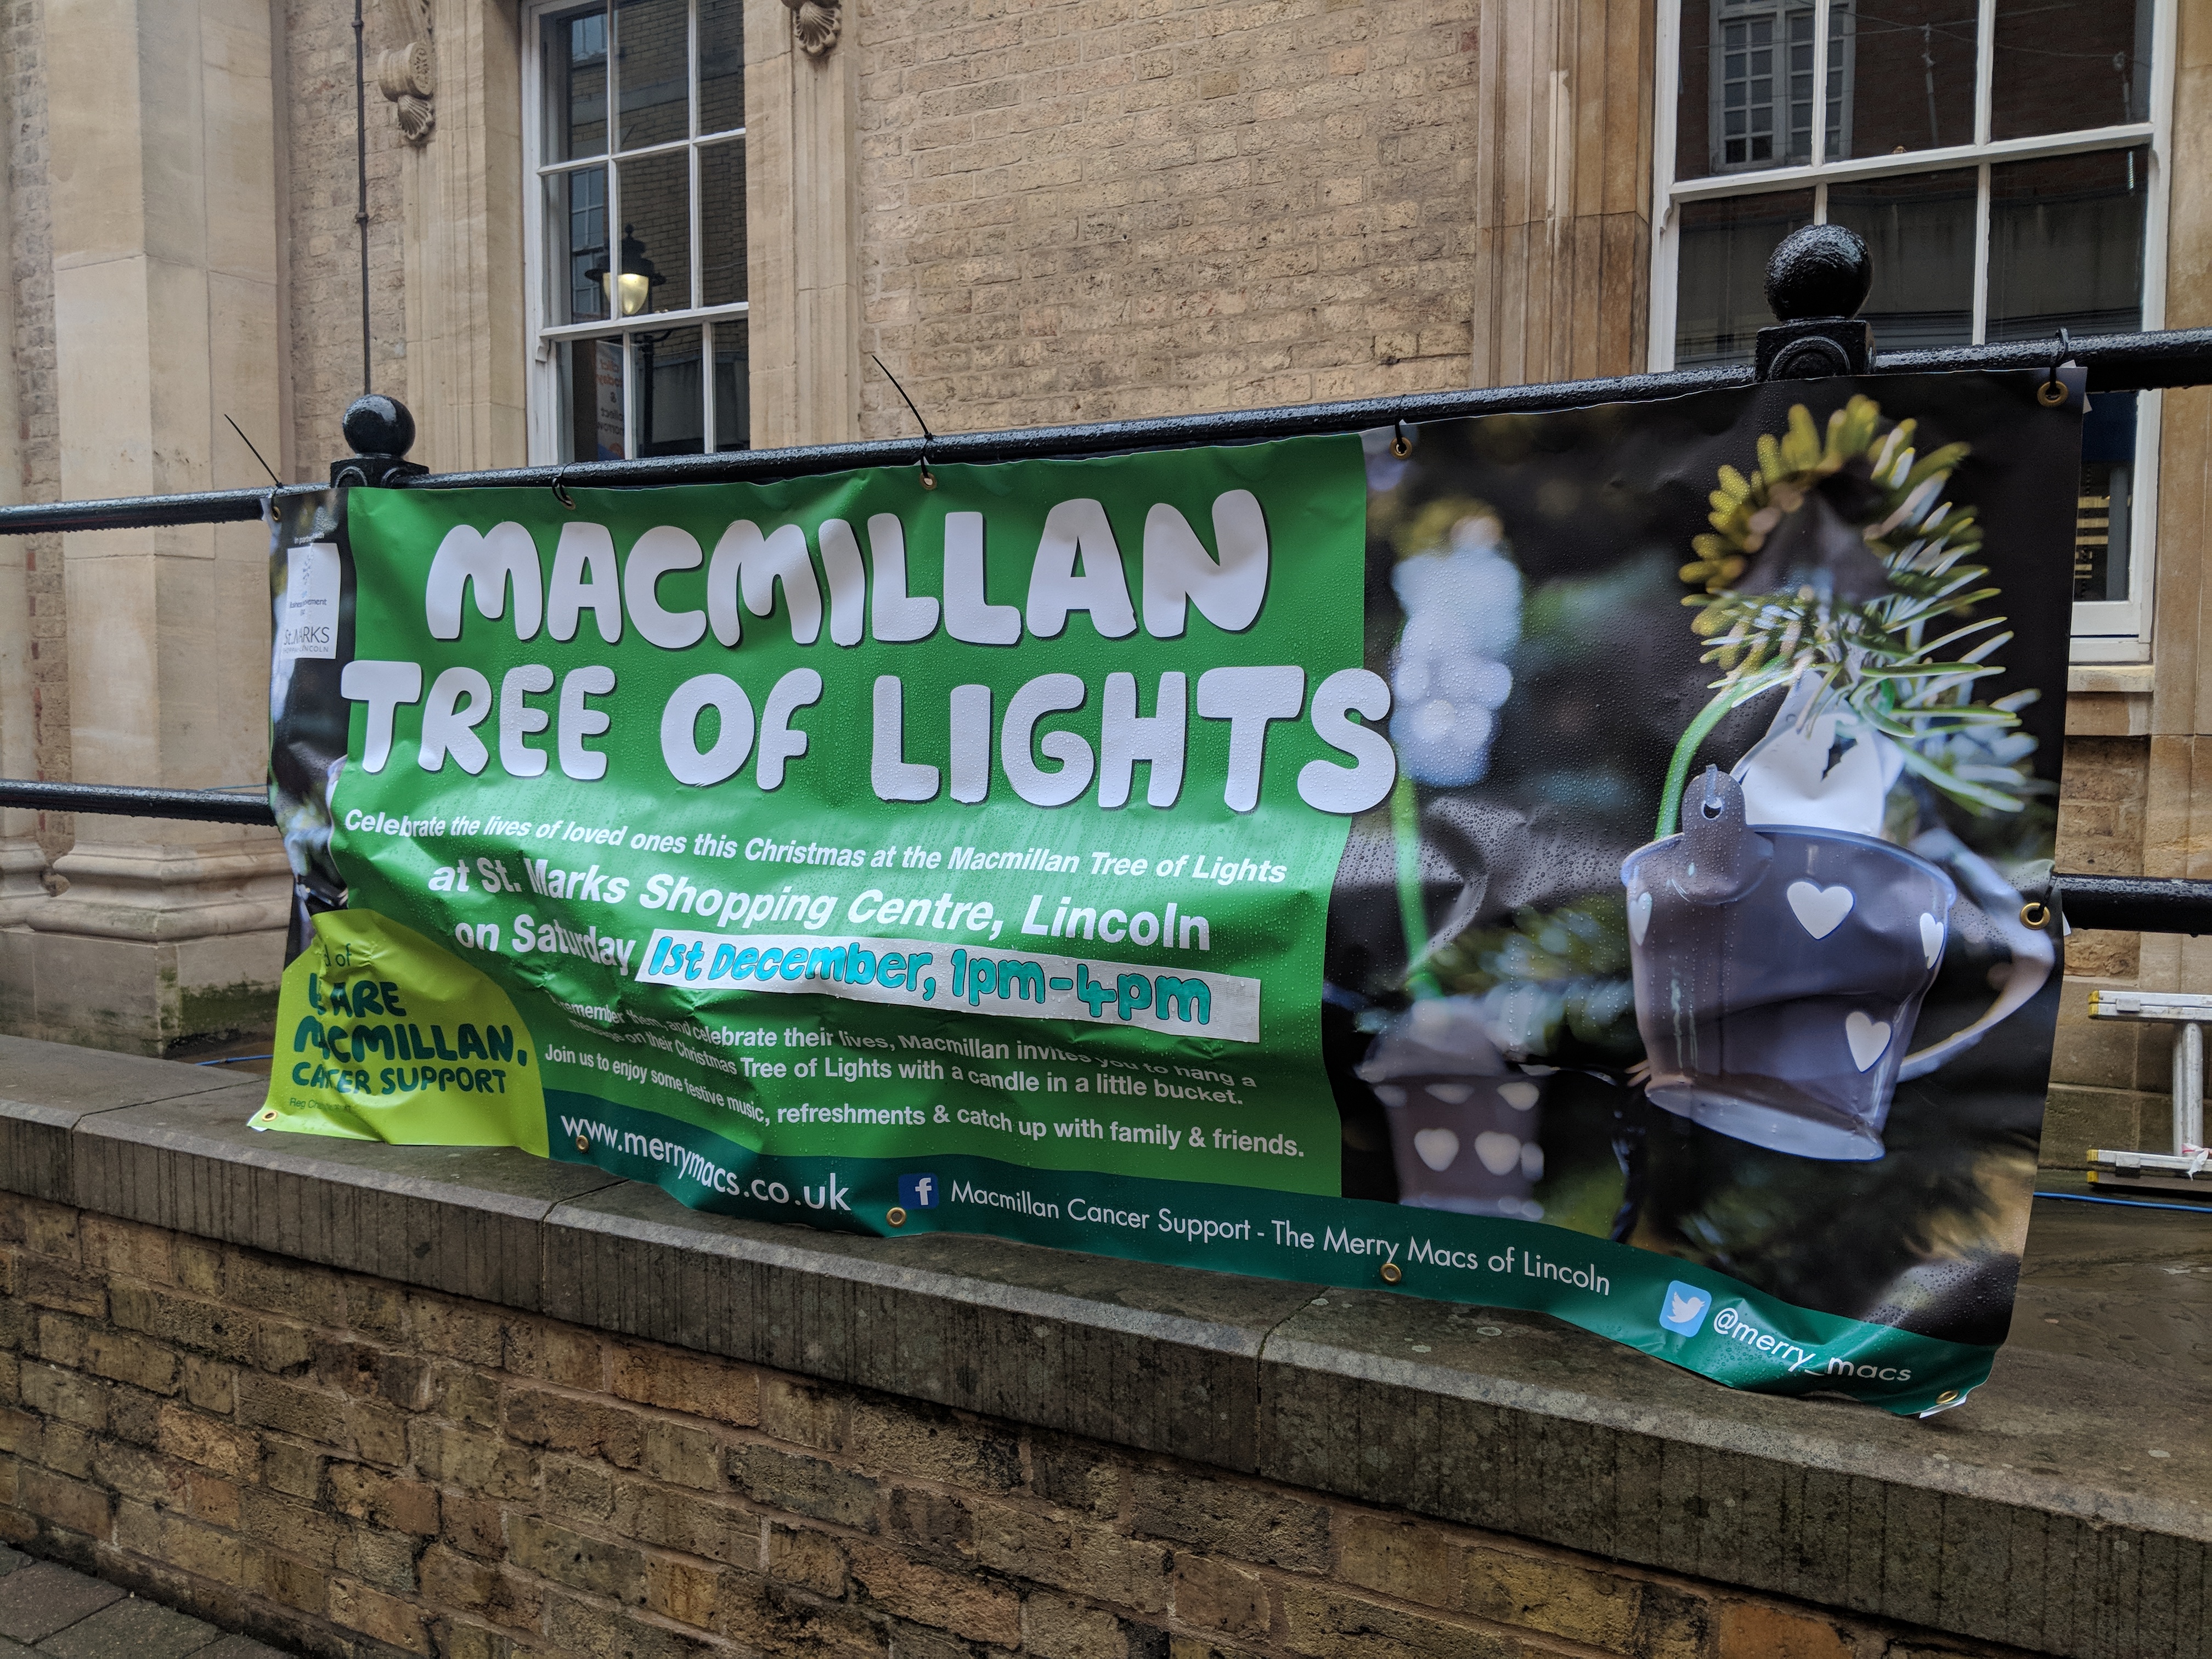 The Macmillan tree of light event. Photo: Alexandra Keene